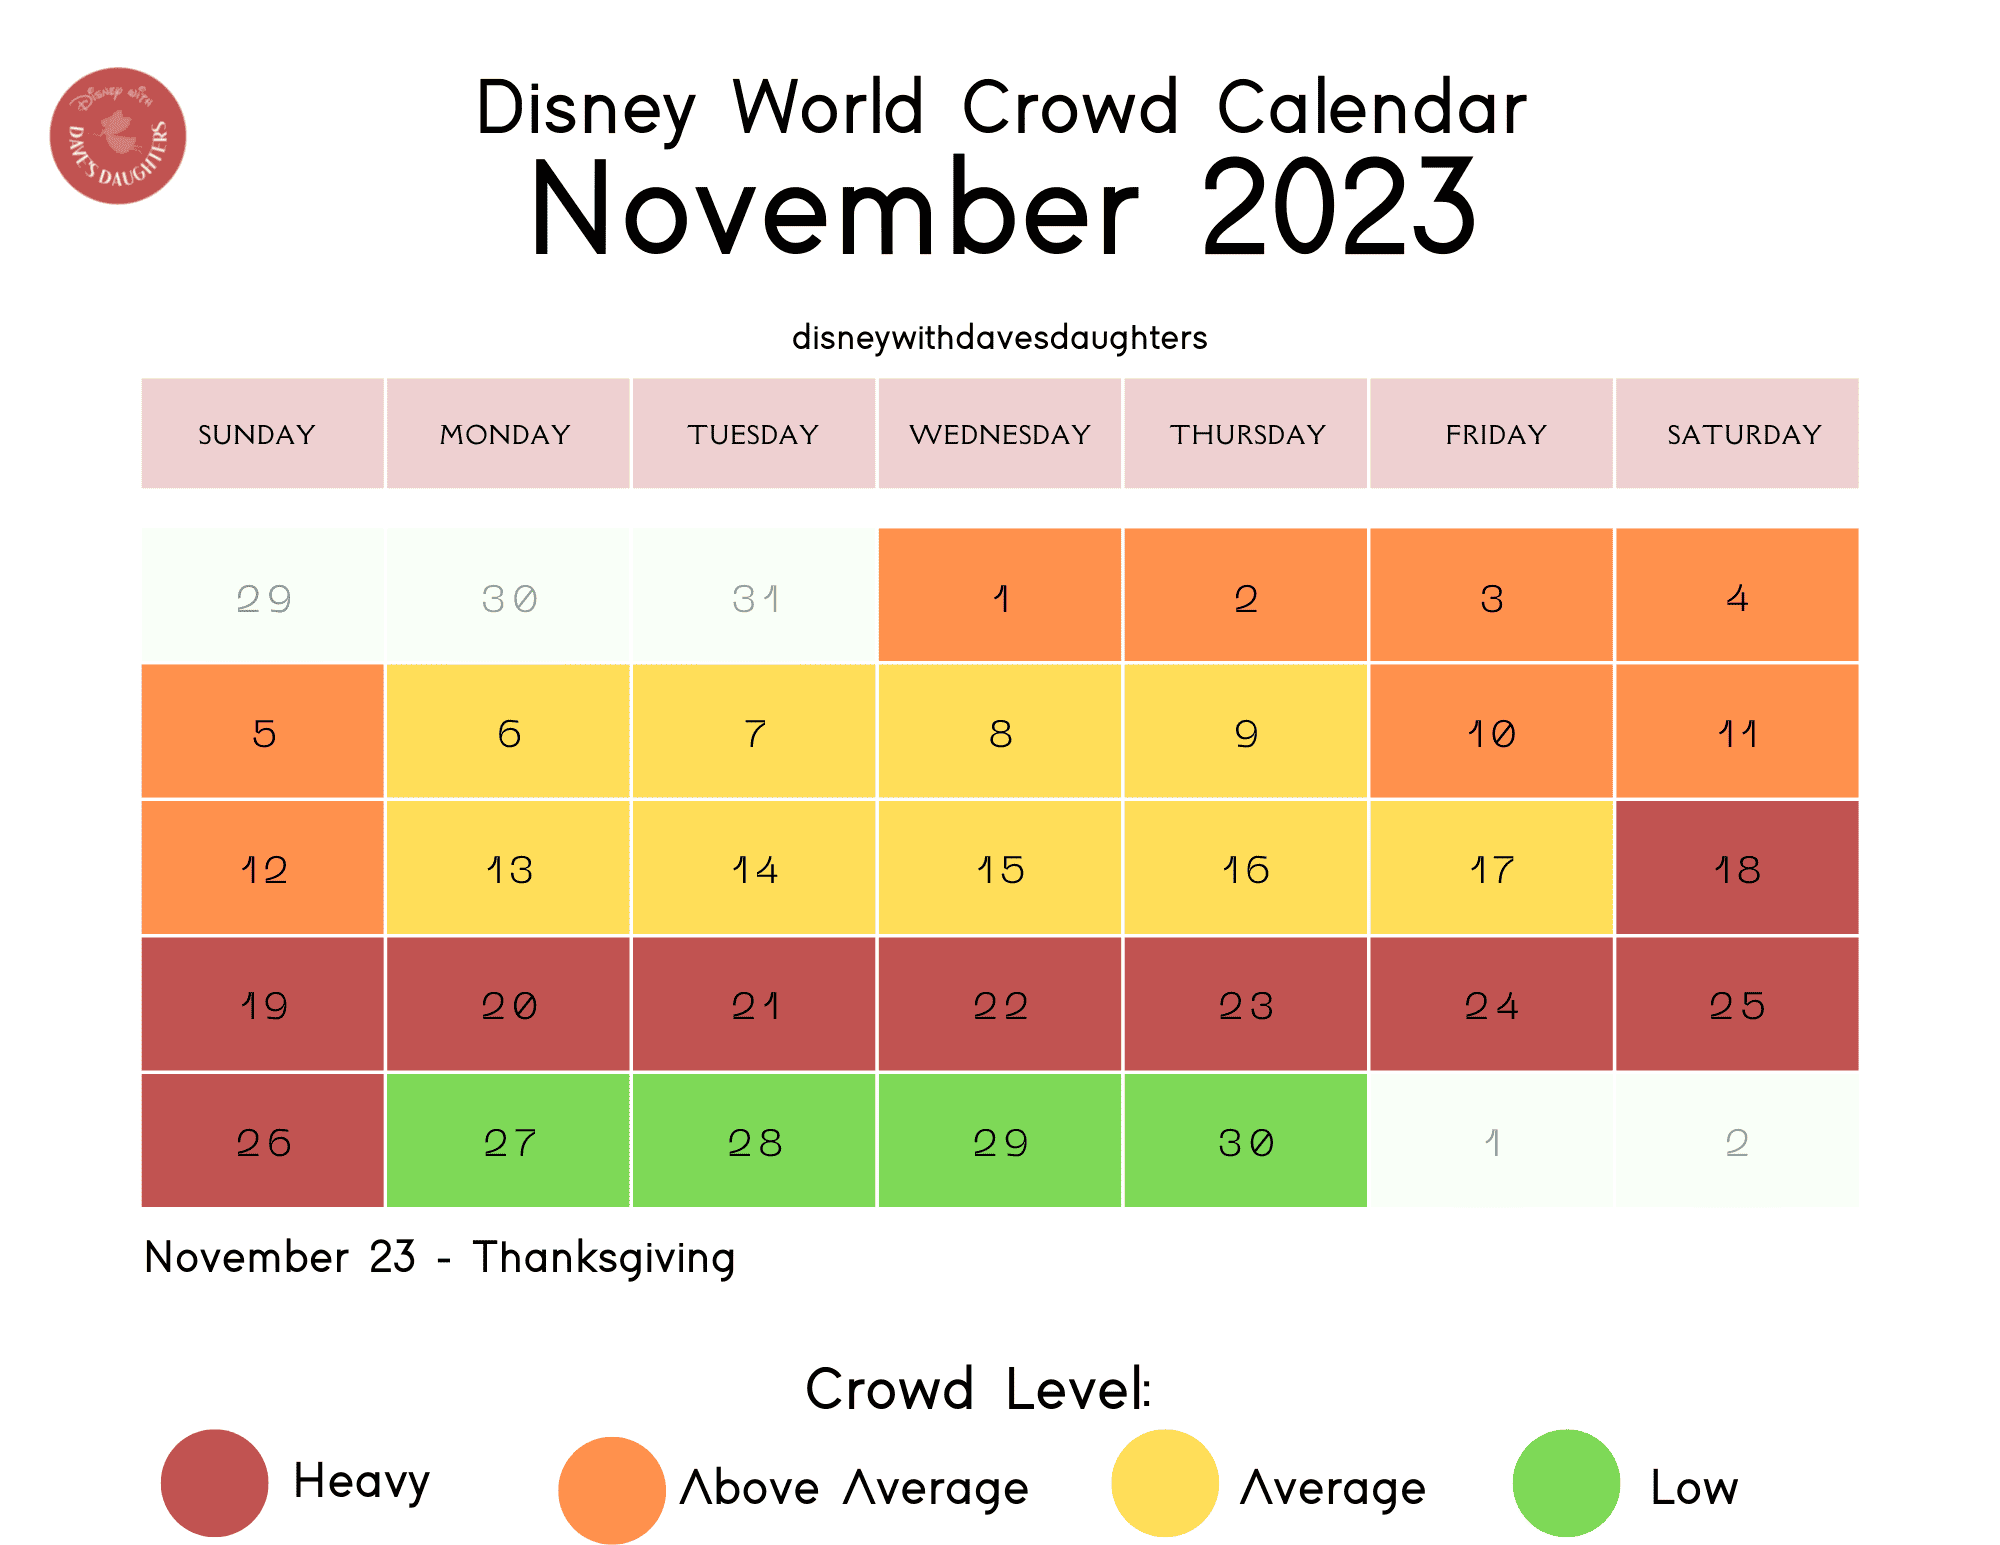 November 2023 crowd calendar